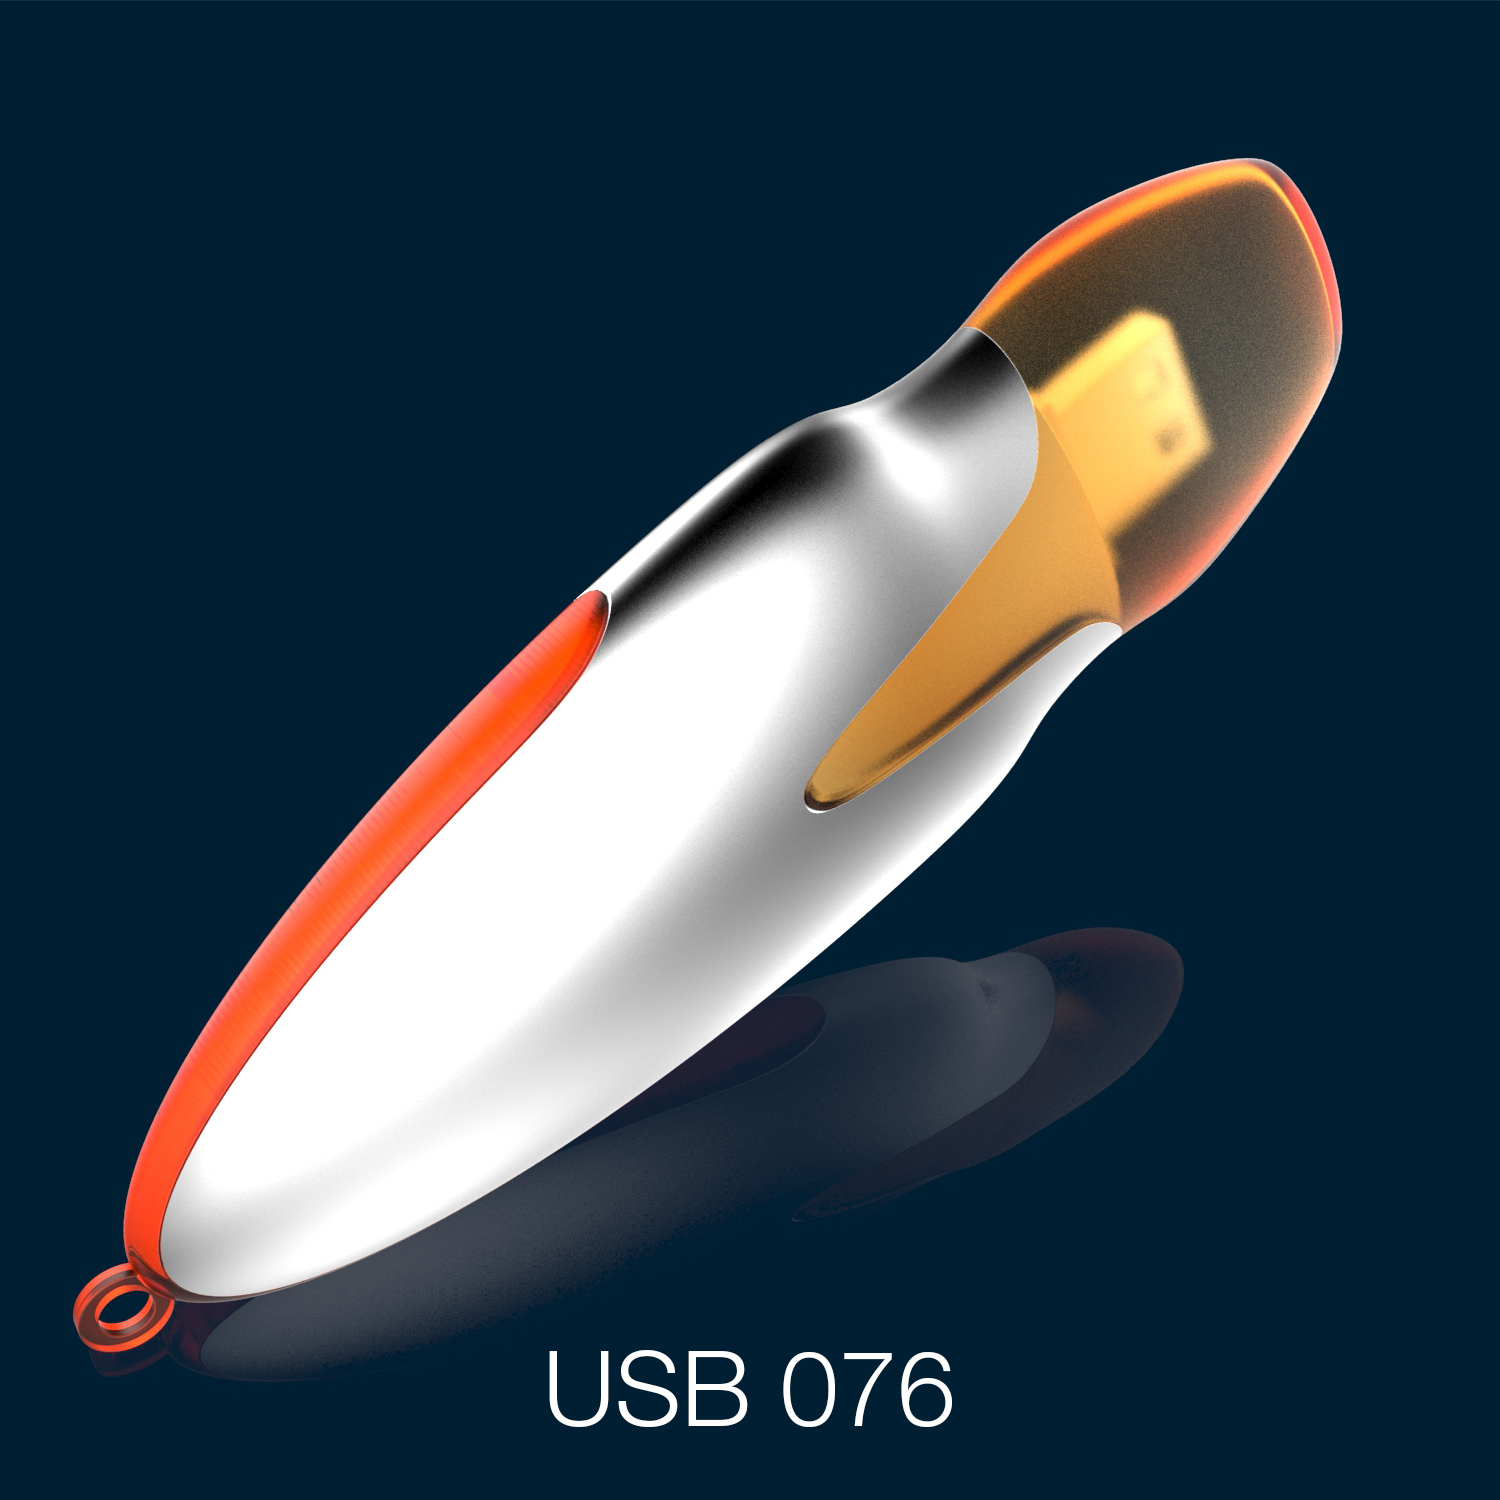 USB 076